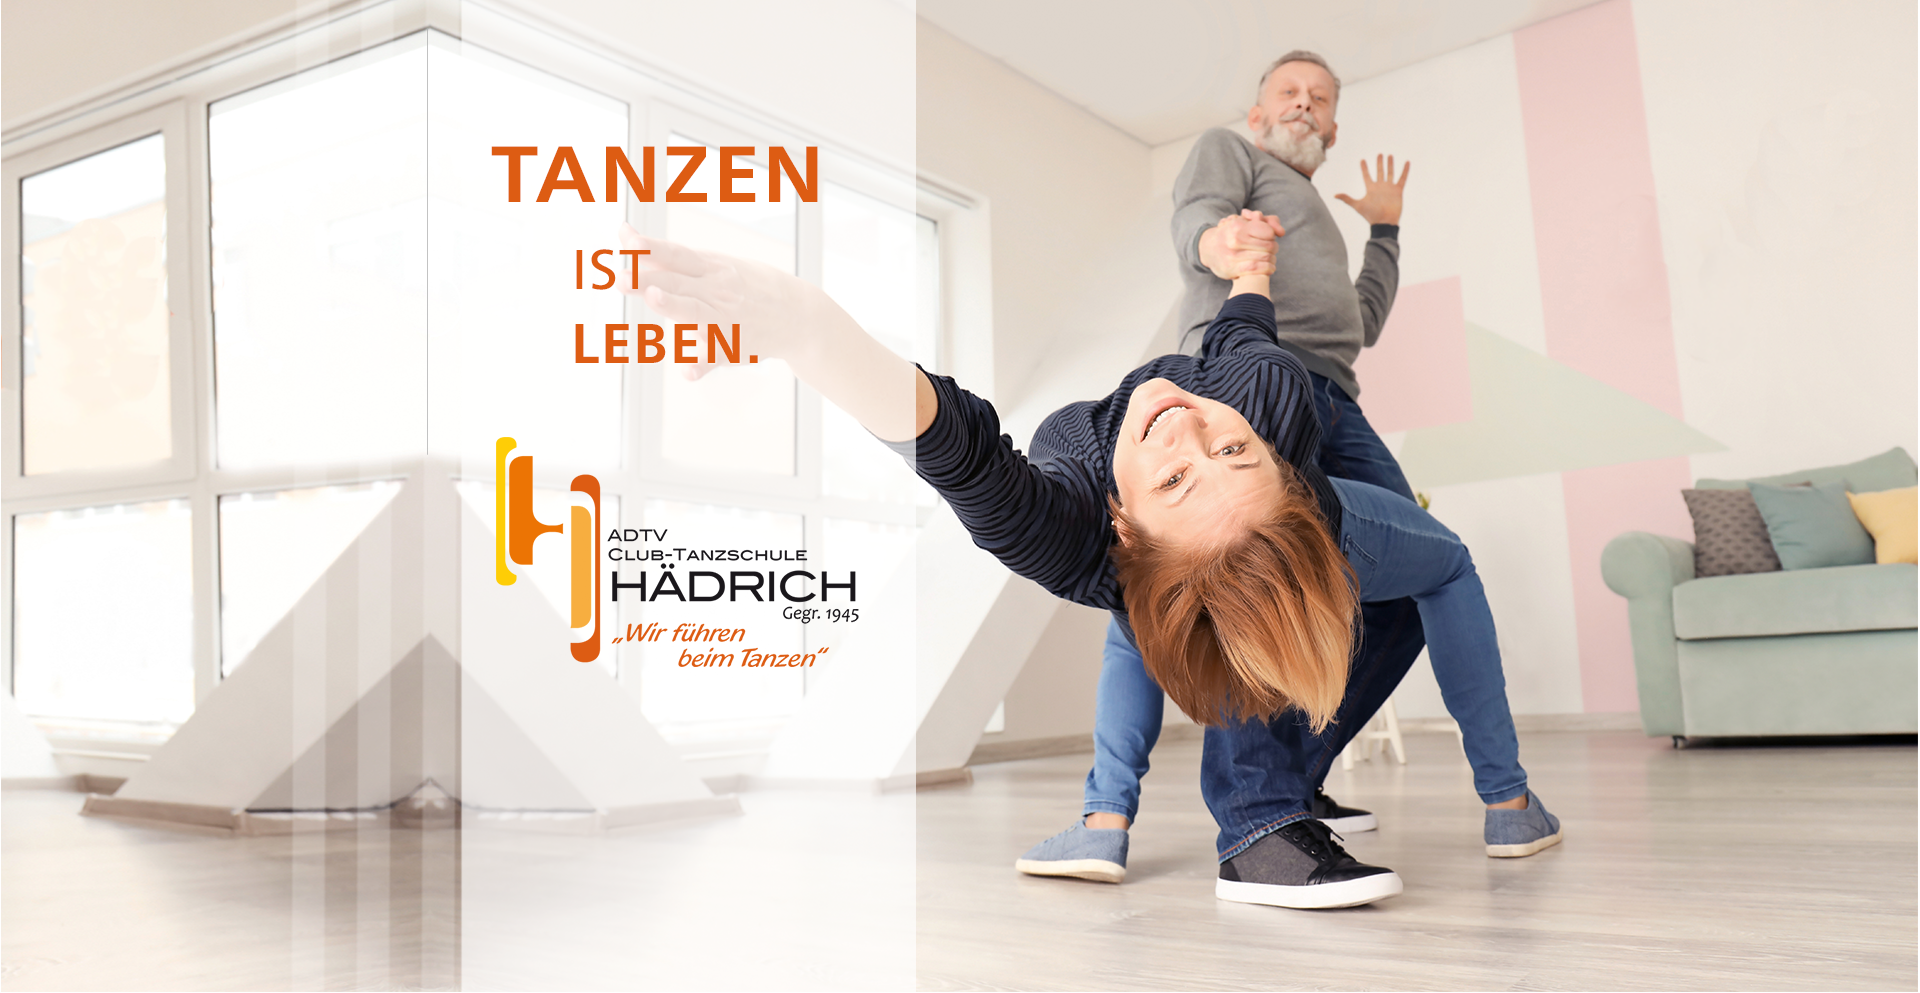 ADTV Tanzschule Hädrich Title Image